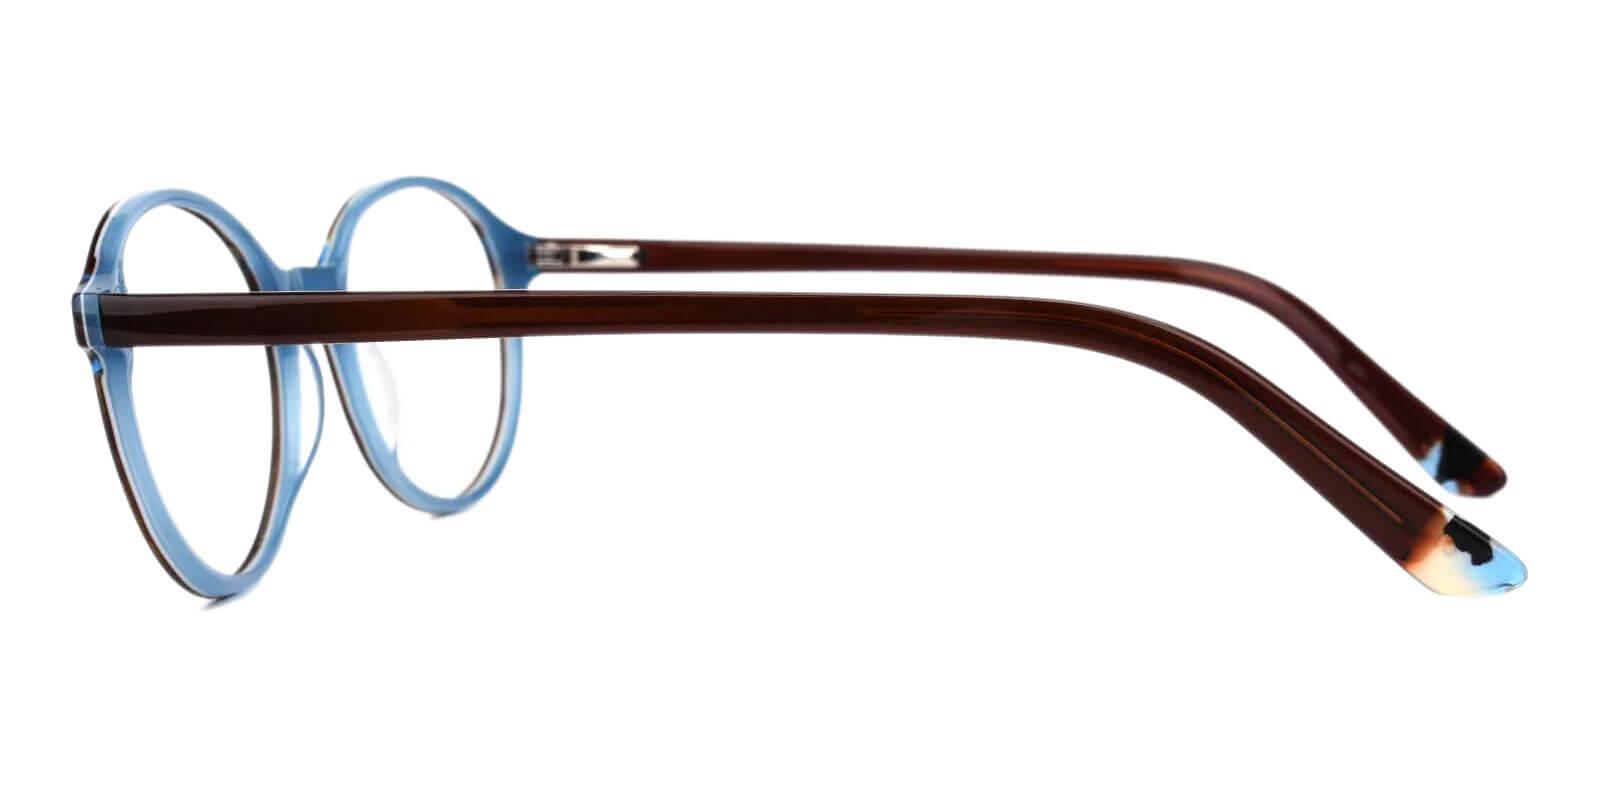 Genbu Brown Acetate Eyeglasses , SpringHinges , UniversalBridgeFit Frames from ABBE Glasses